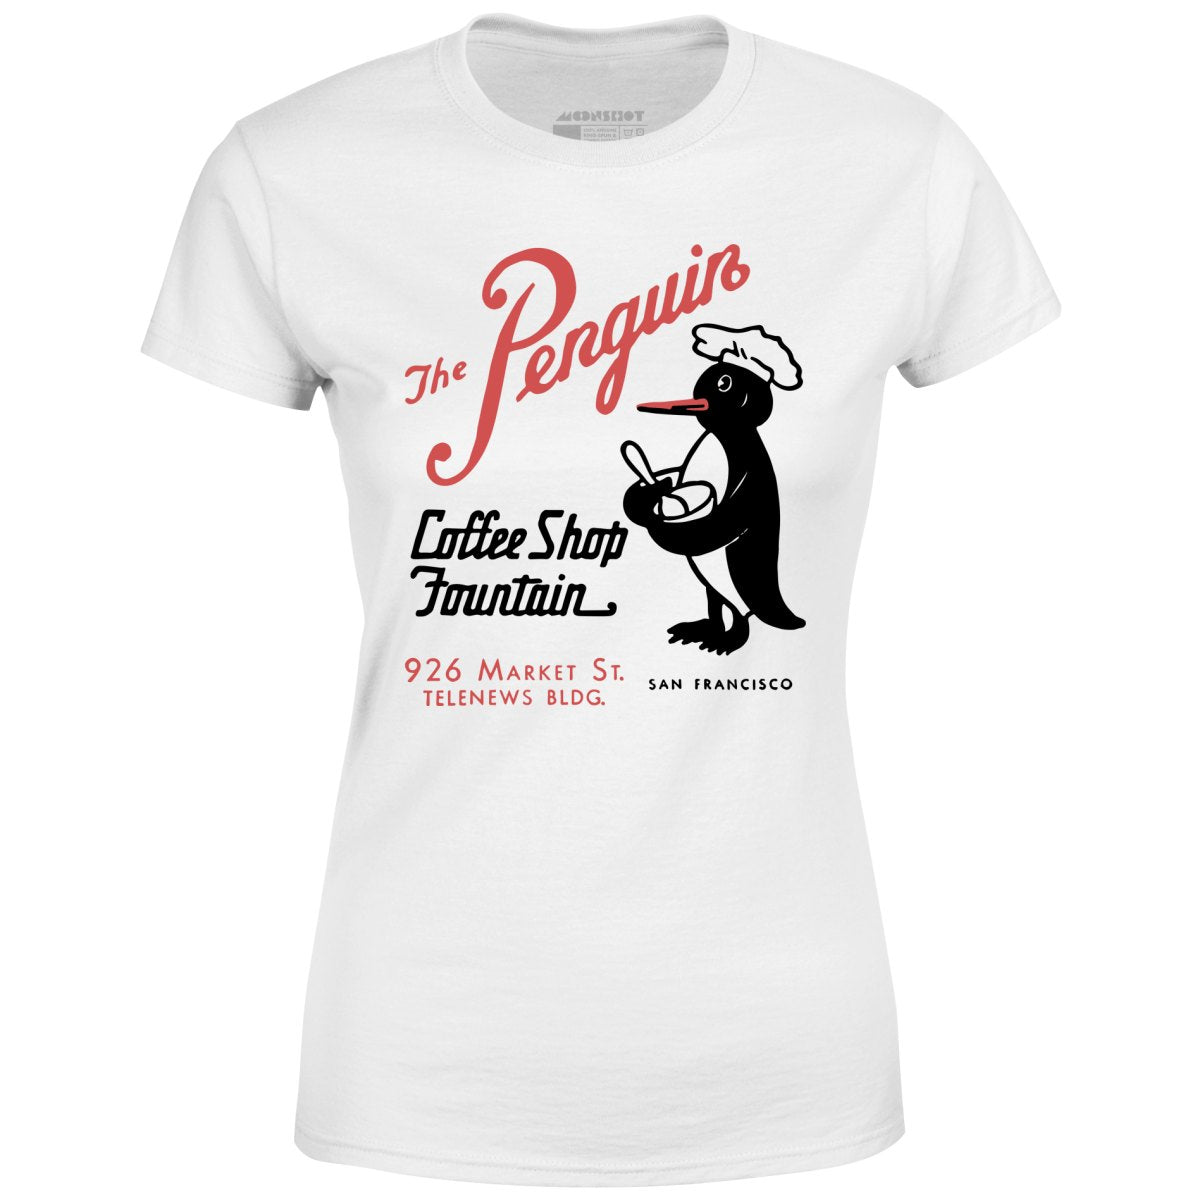 The Penguin - San Francisco, CA - Vintage Restaurant - Women's T-Shirt